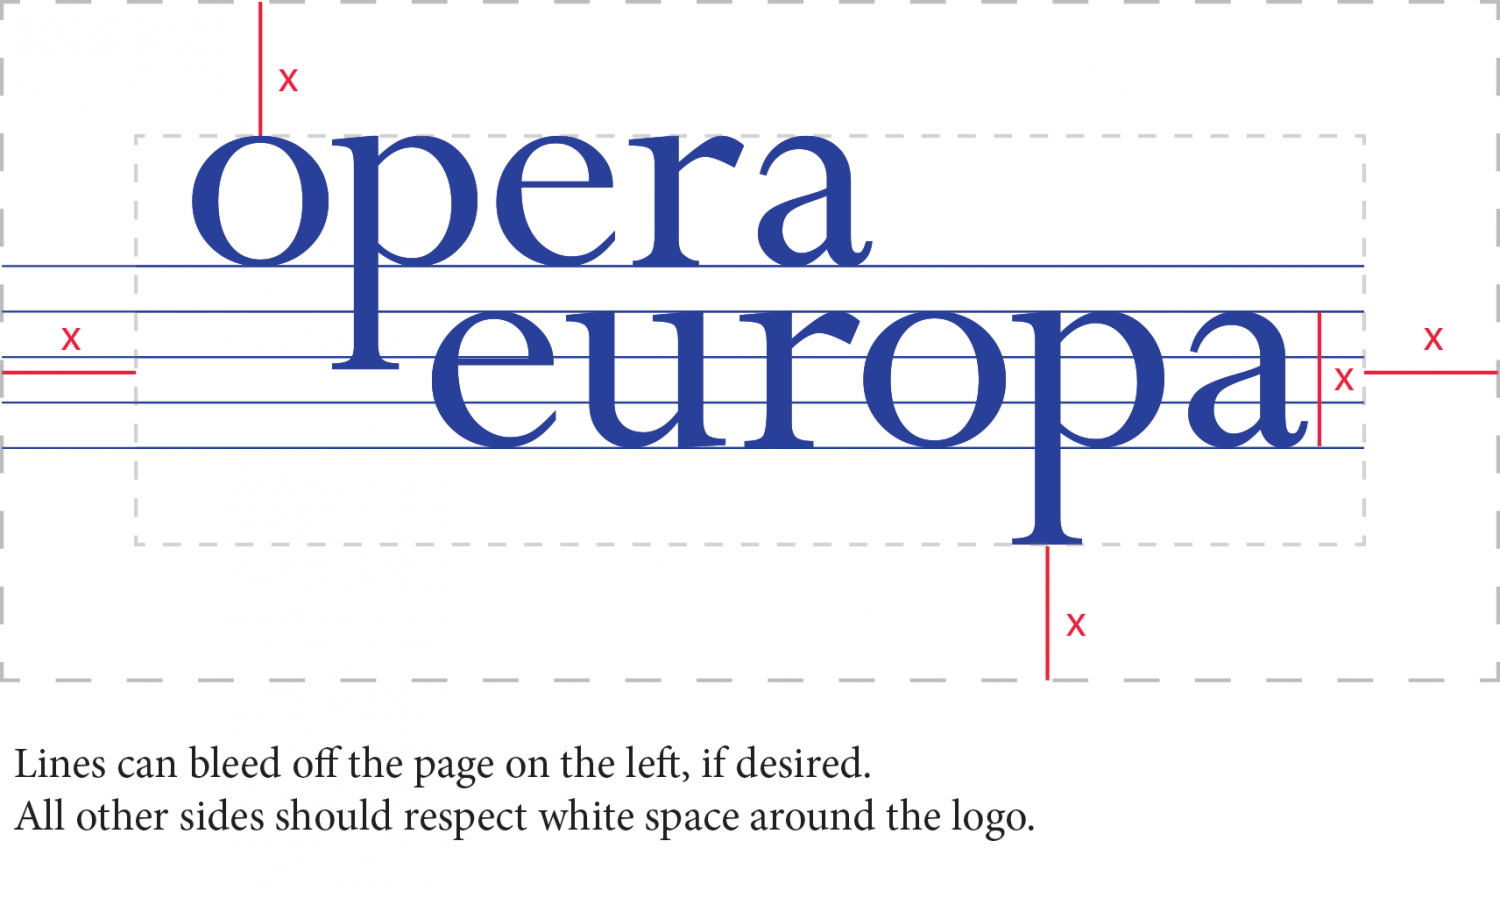 White and Blue Rectangle Logo - Opera Europa logos - Opera-Europa